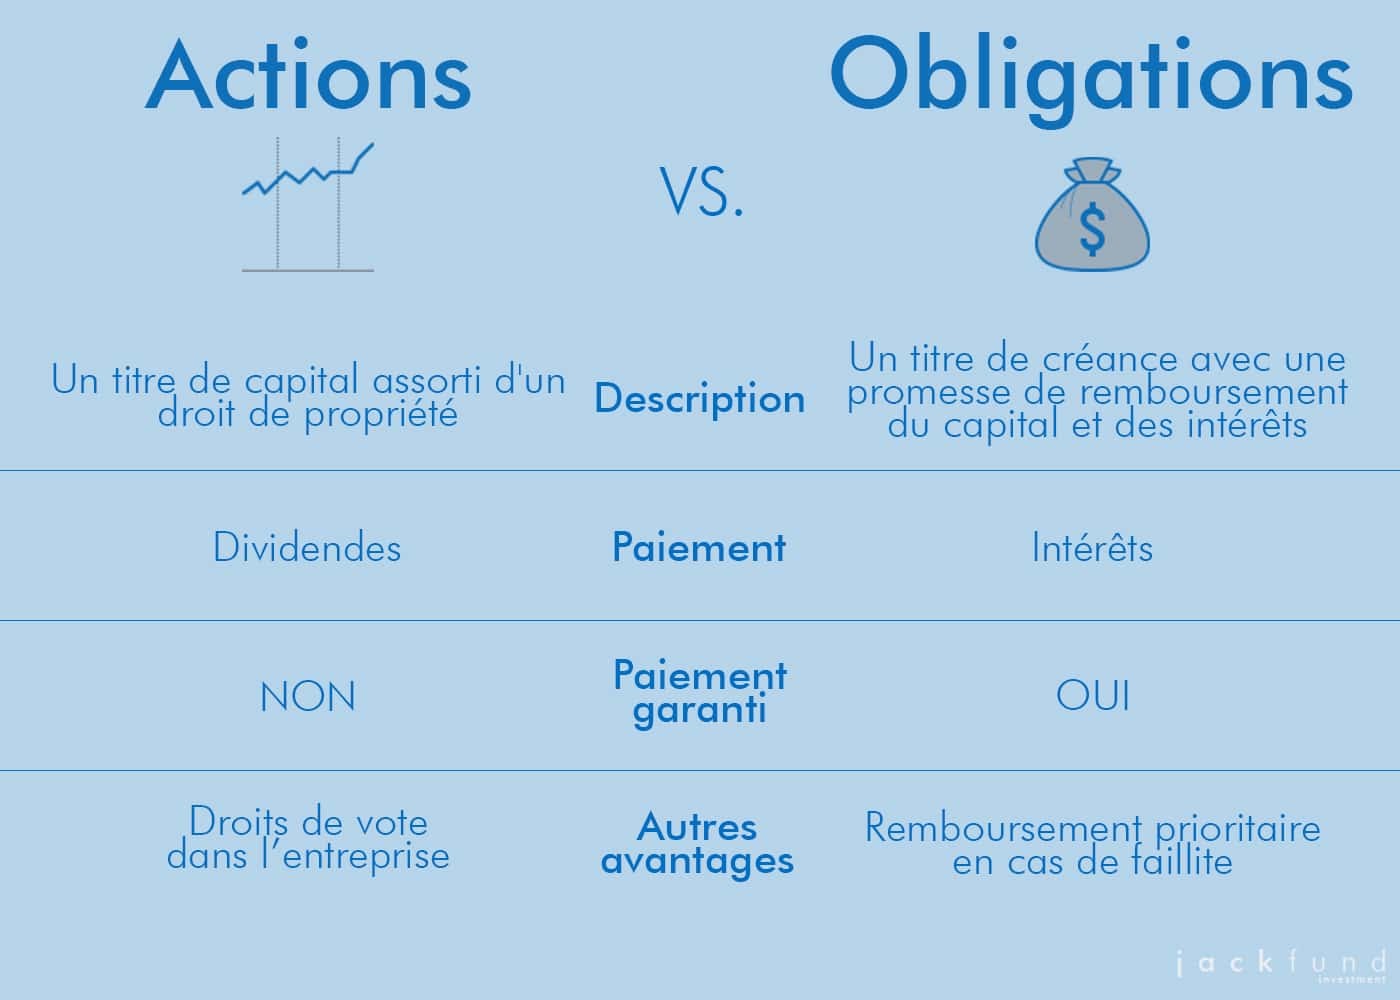 Actions vs. Obligations